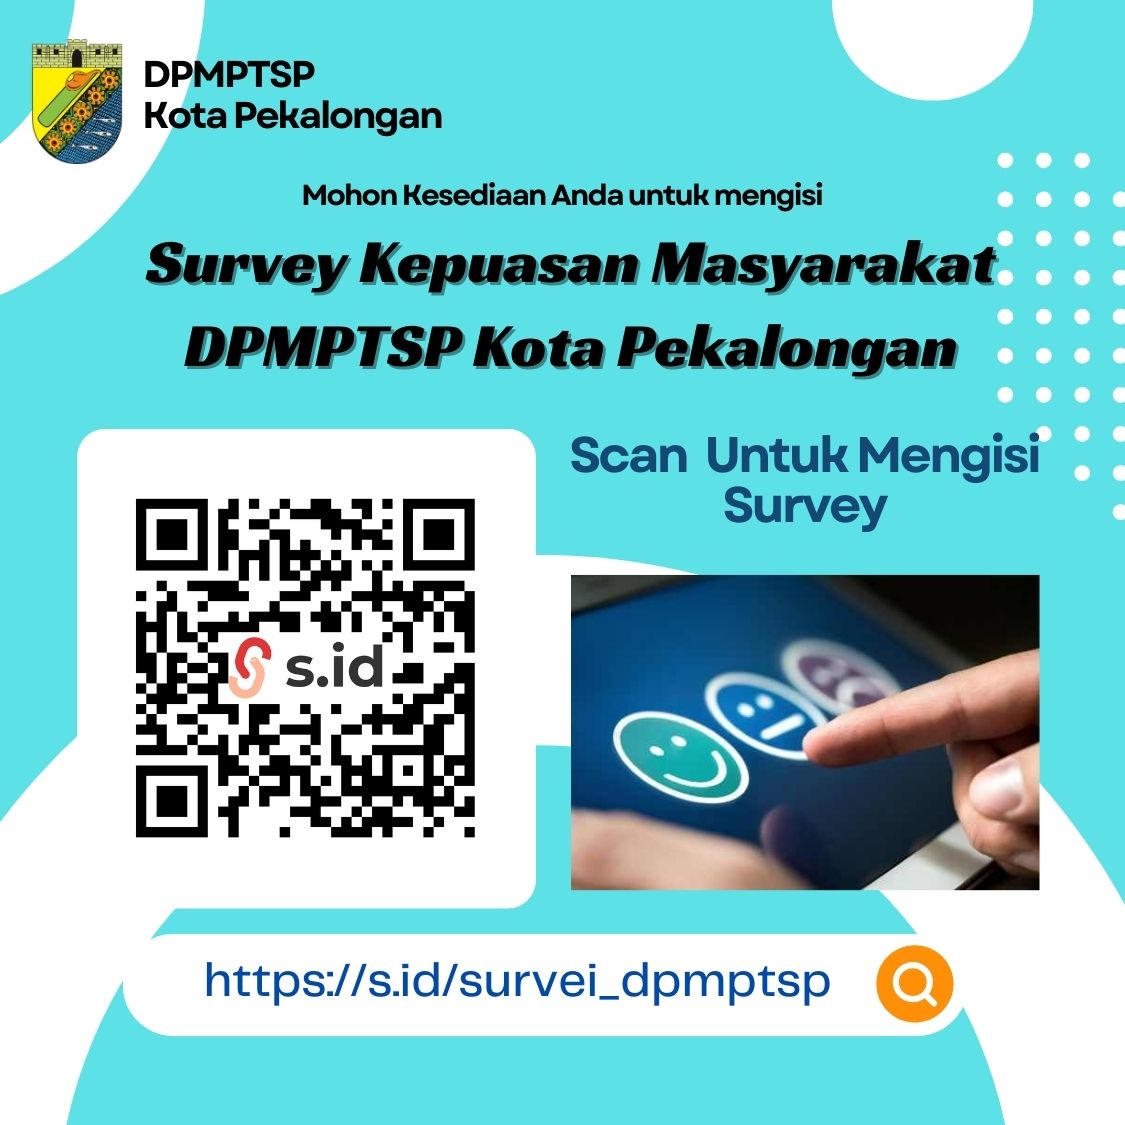 Survey Kepuasan Masyarakat terkait dengan Pelayanan DPMPTSP Kota Pekalongan